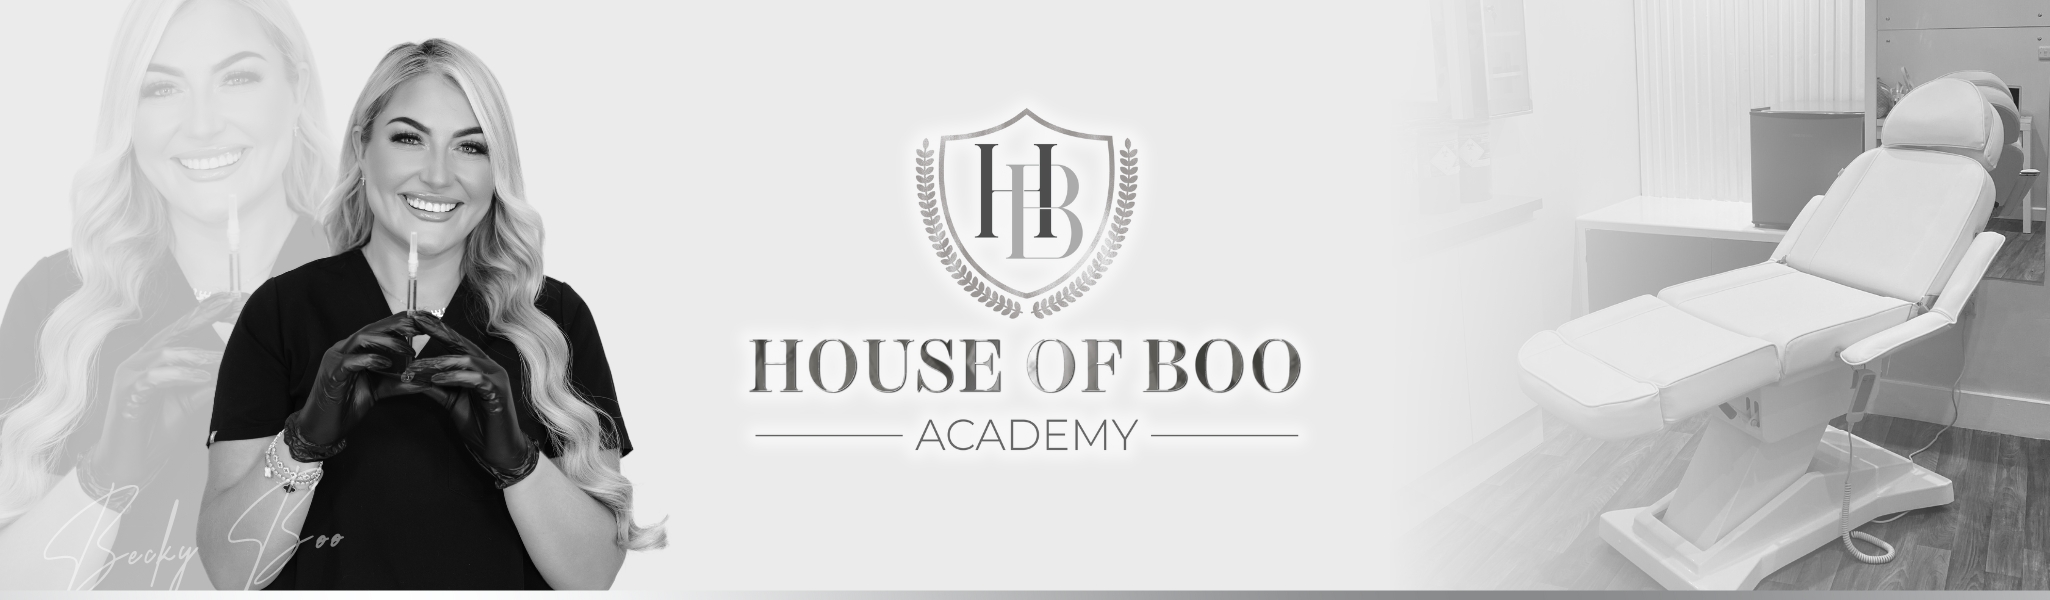 House Of Boo Academy 01